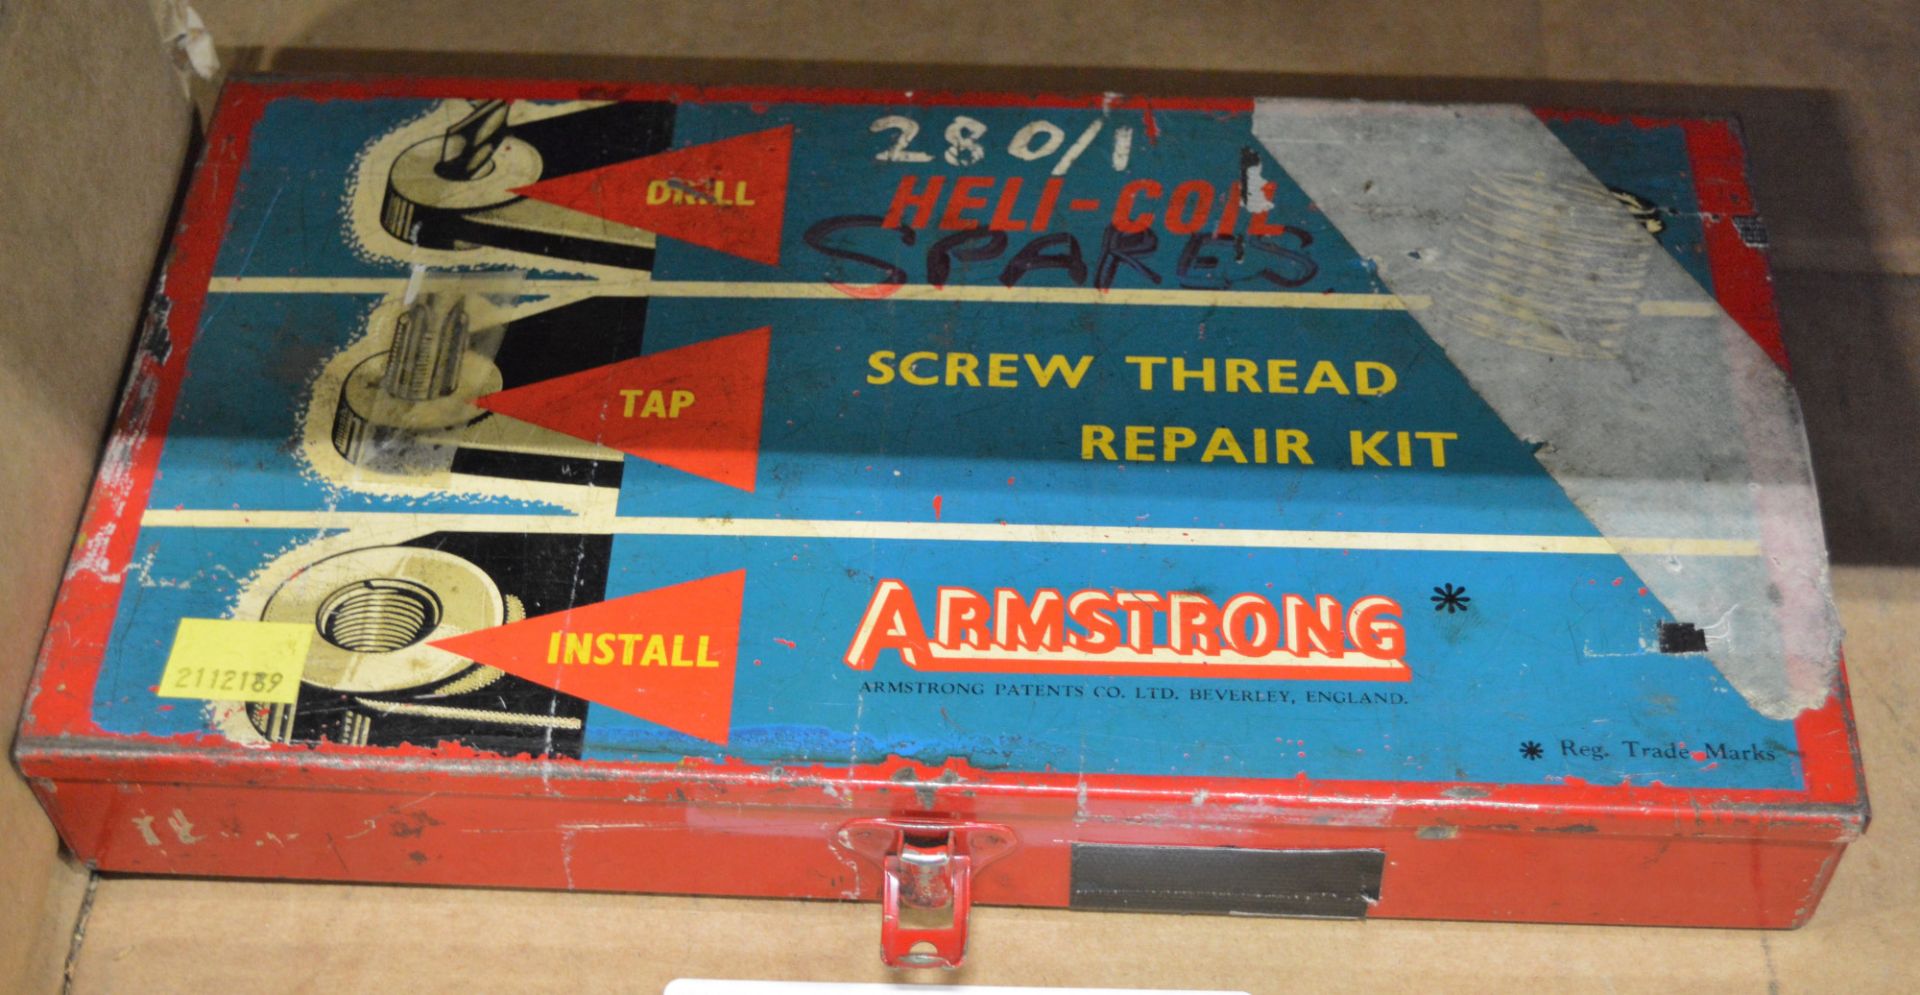 Armstrong Thread Repair Kit.